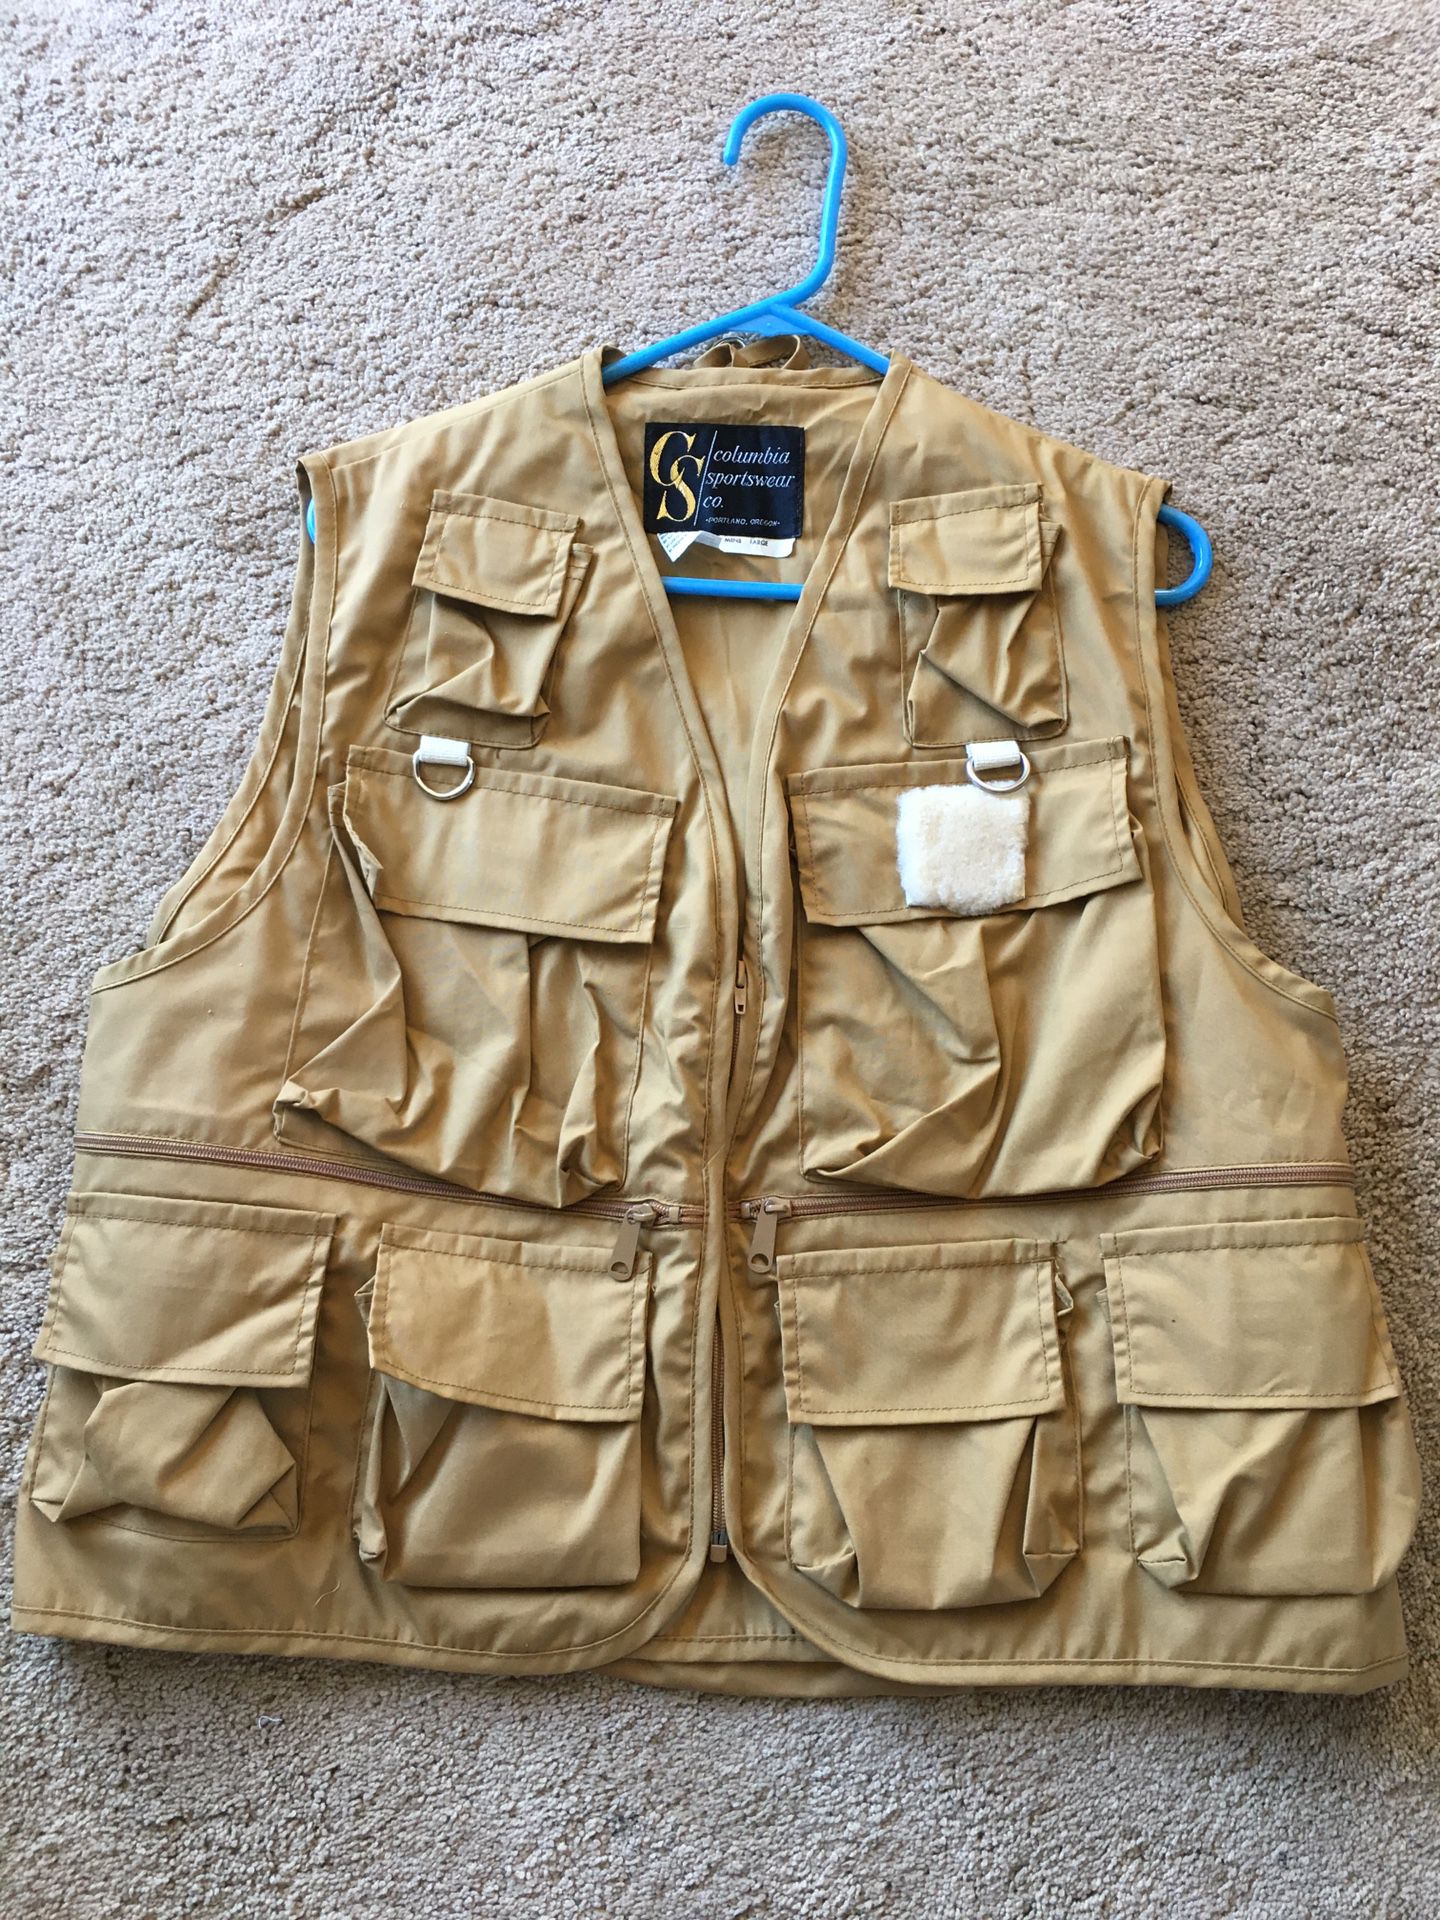 Fishing vest large $20